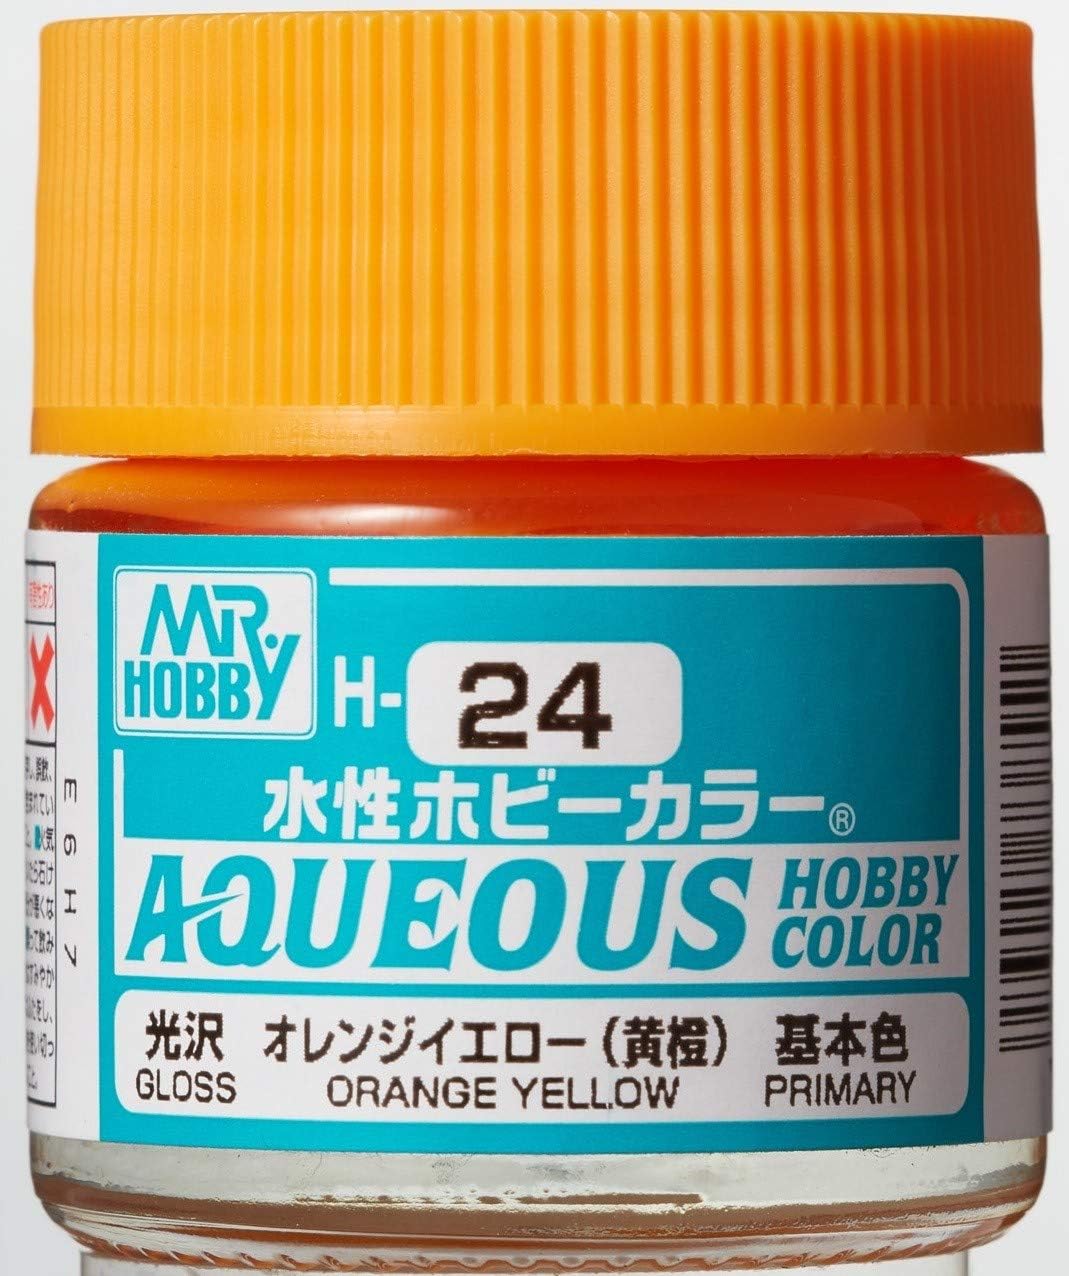 Mr. Hobby Aqueous Hobby Color H24 Gloss Orange Yellow 10ml Bottle